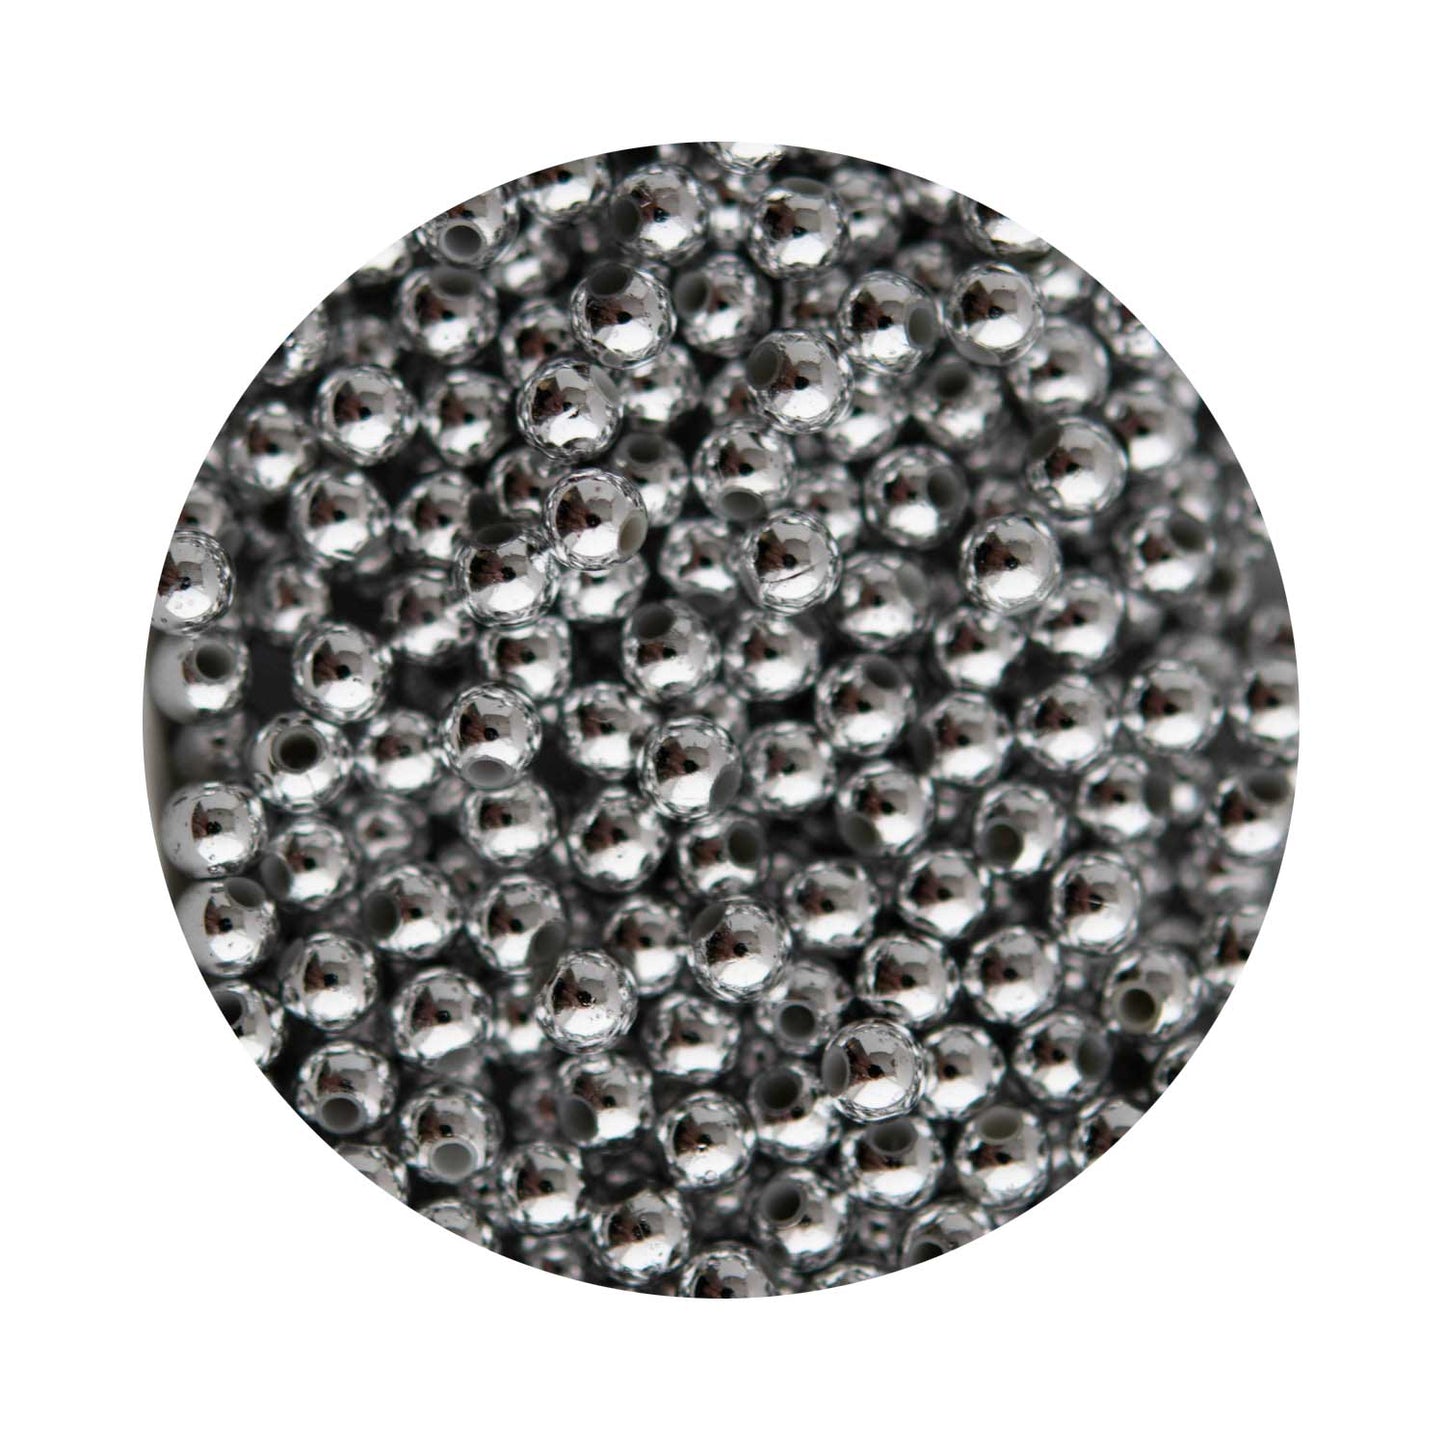 4mm Metallic Seed Beads